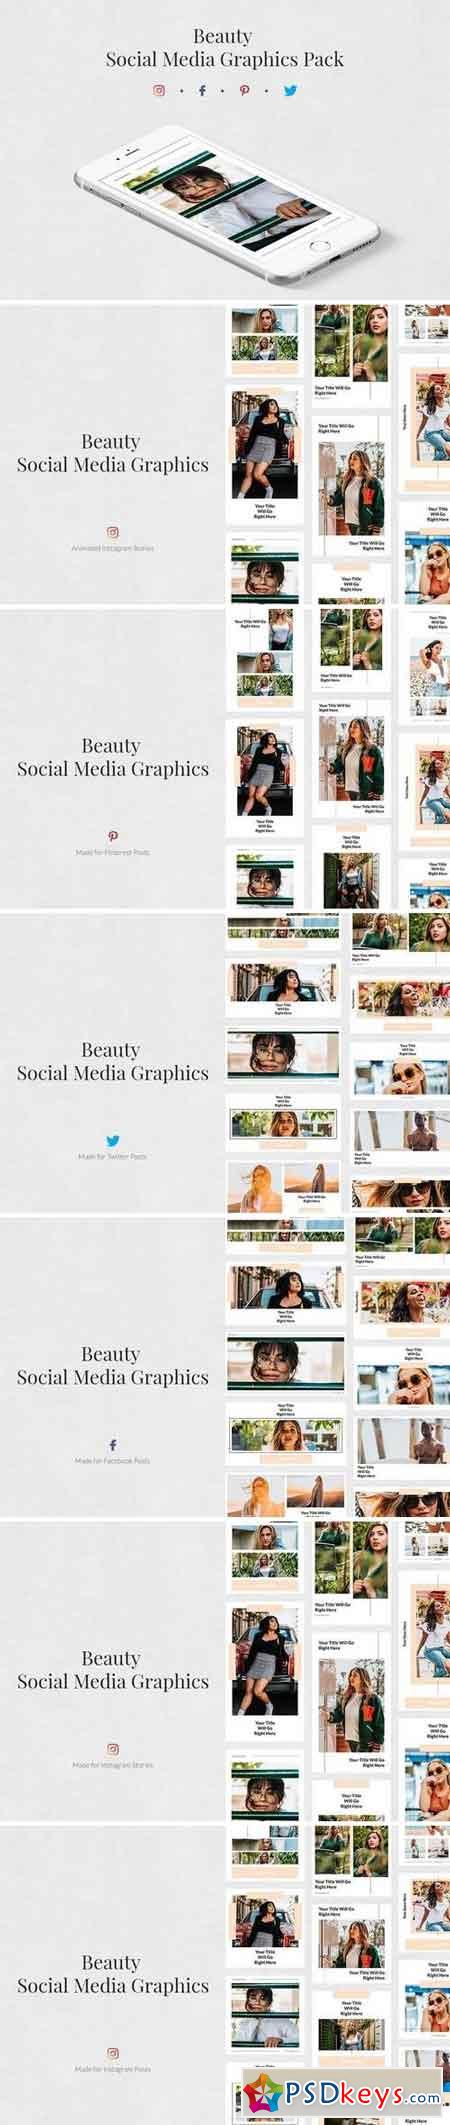 Beauty Social Media Graphics Pack